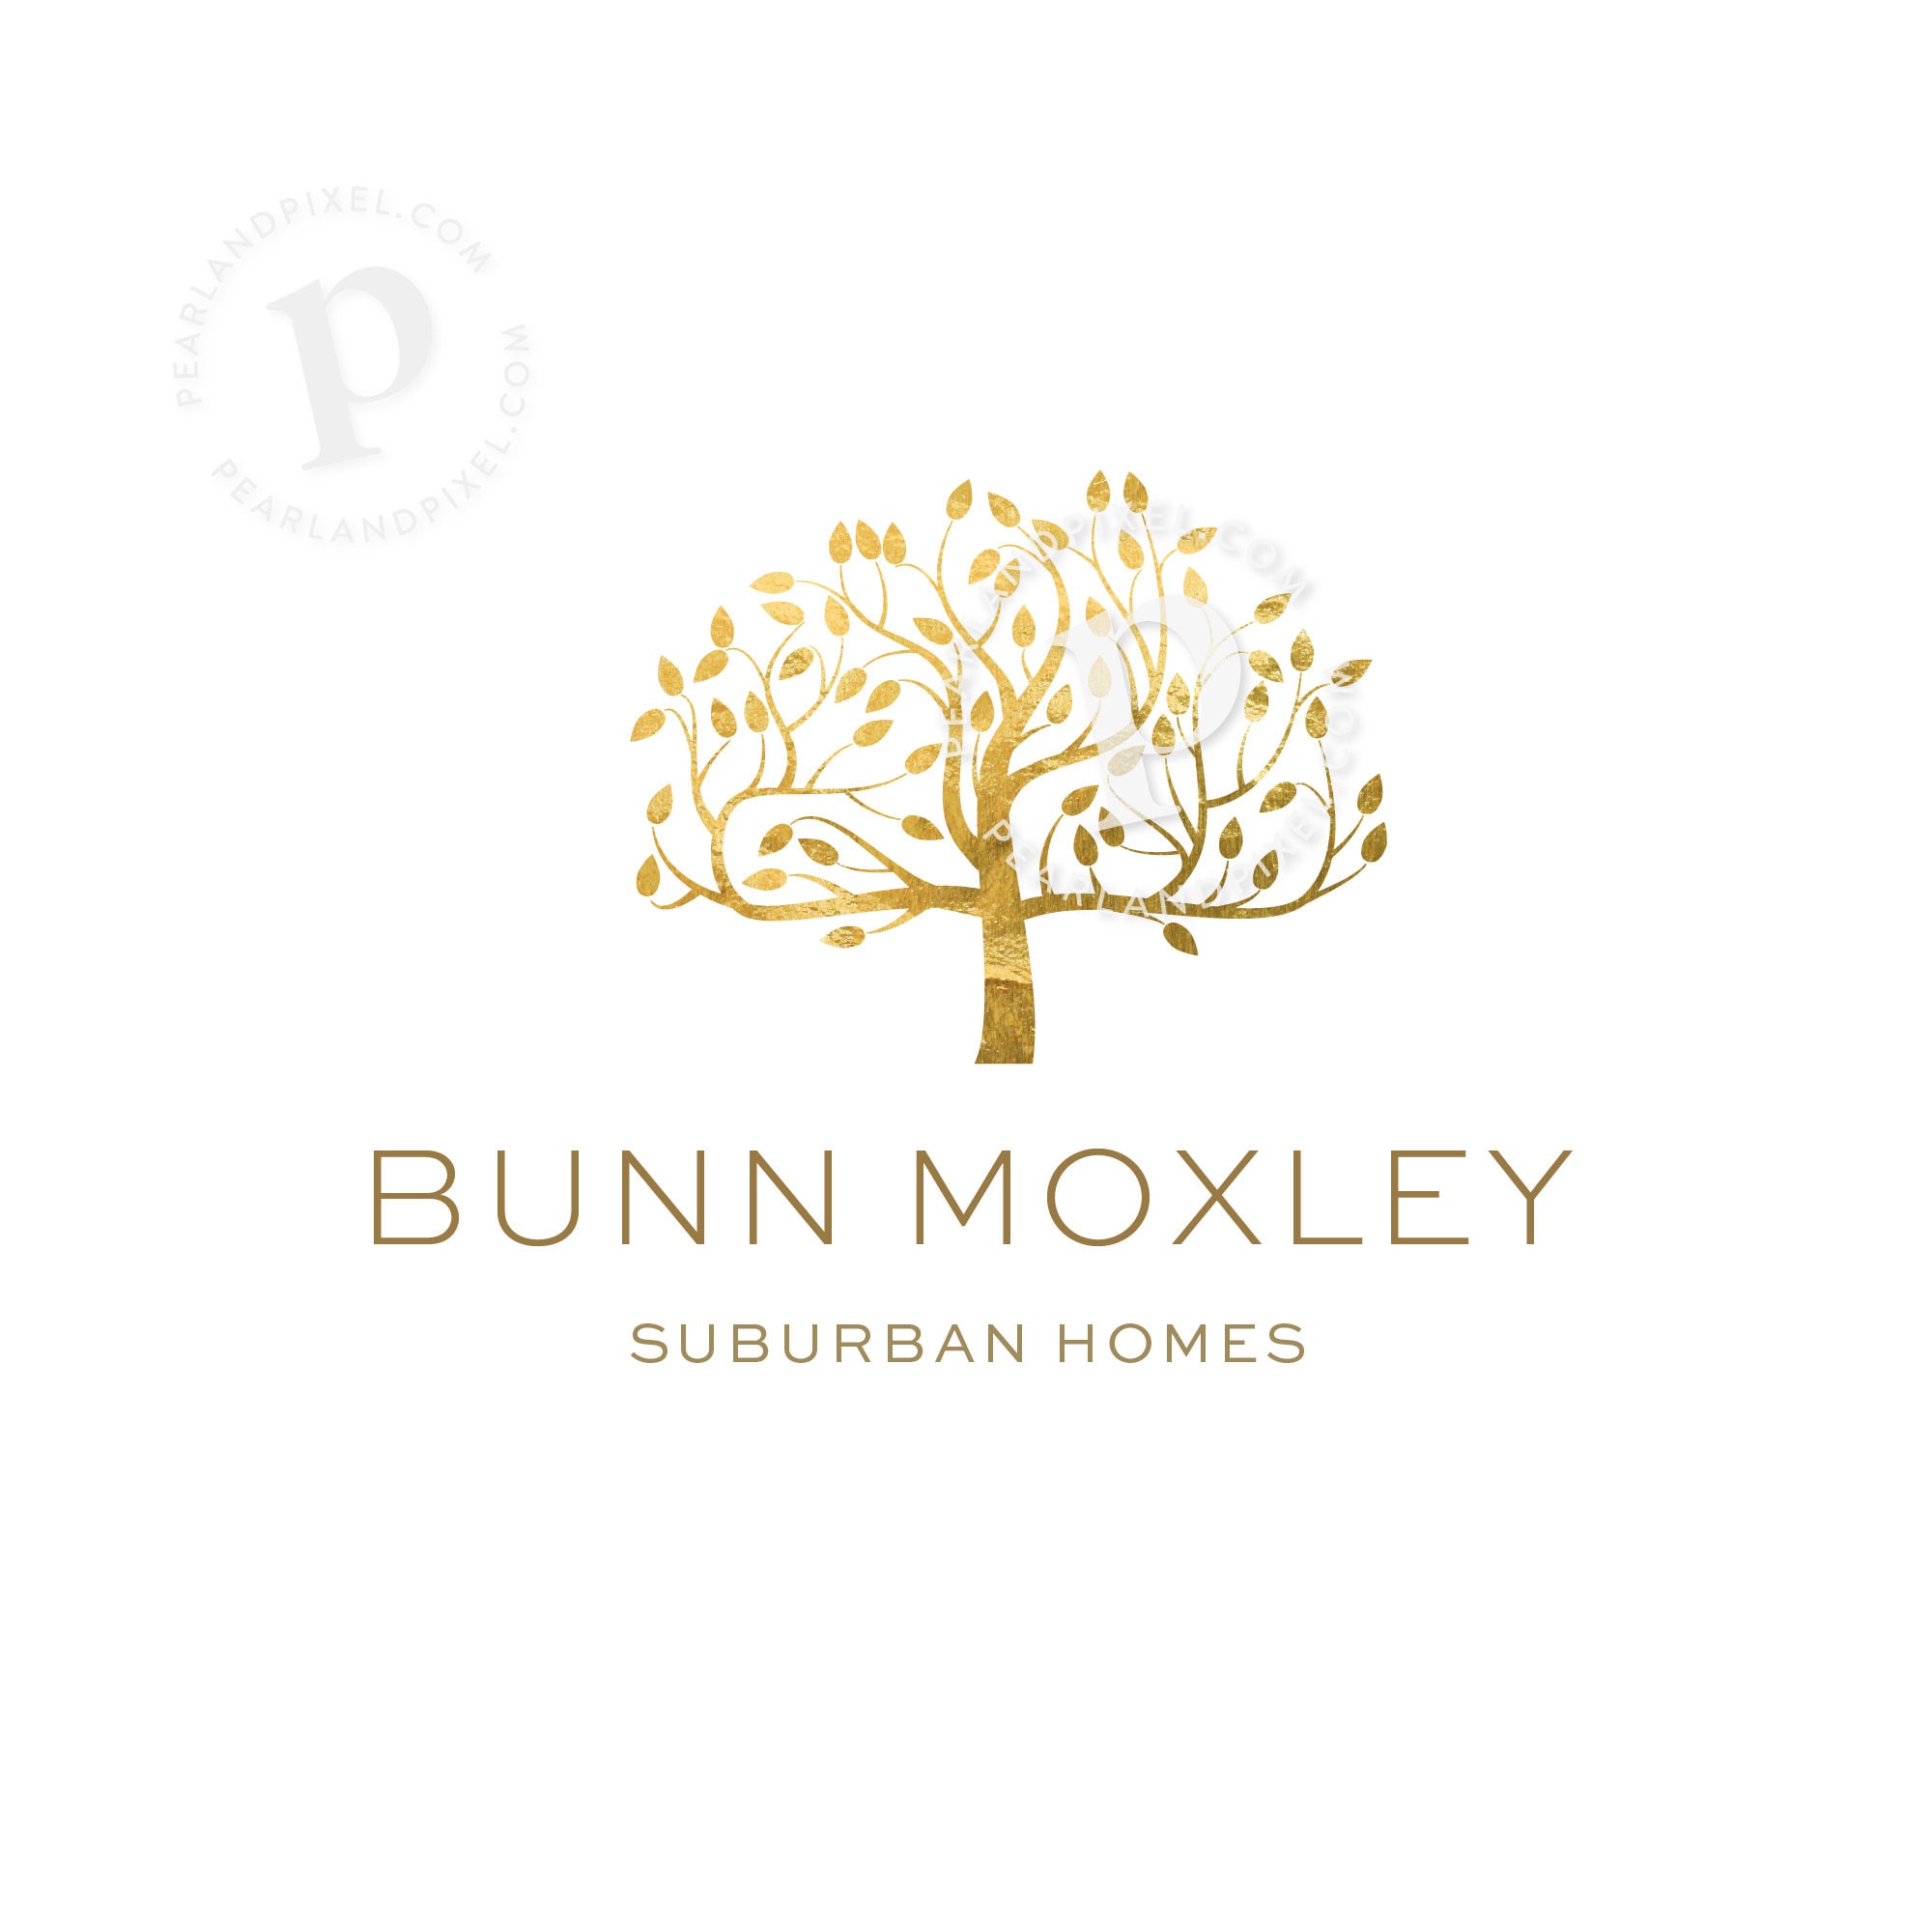 mulberry tree logo